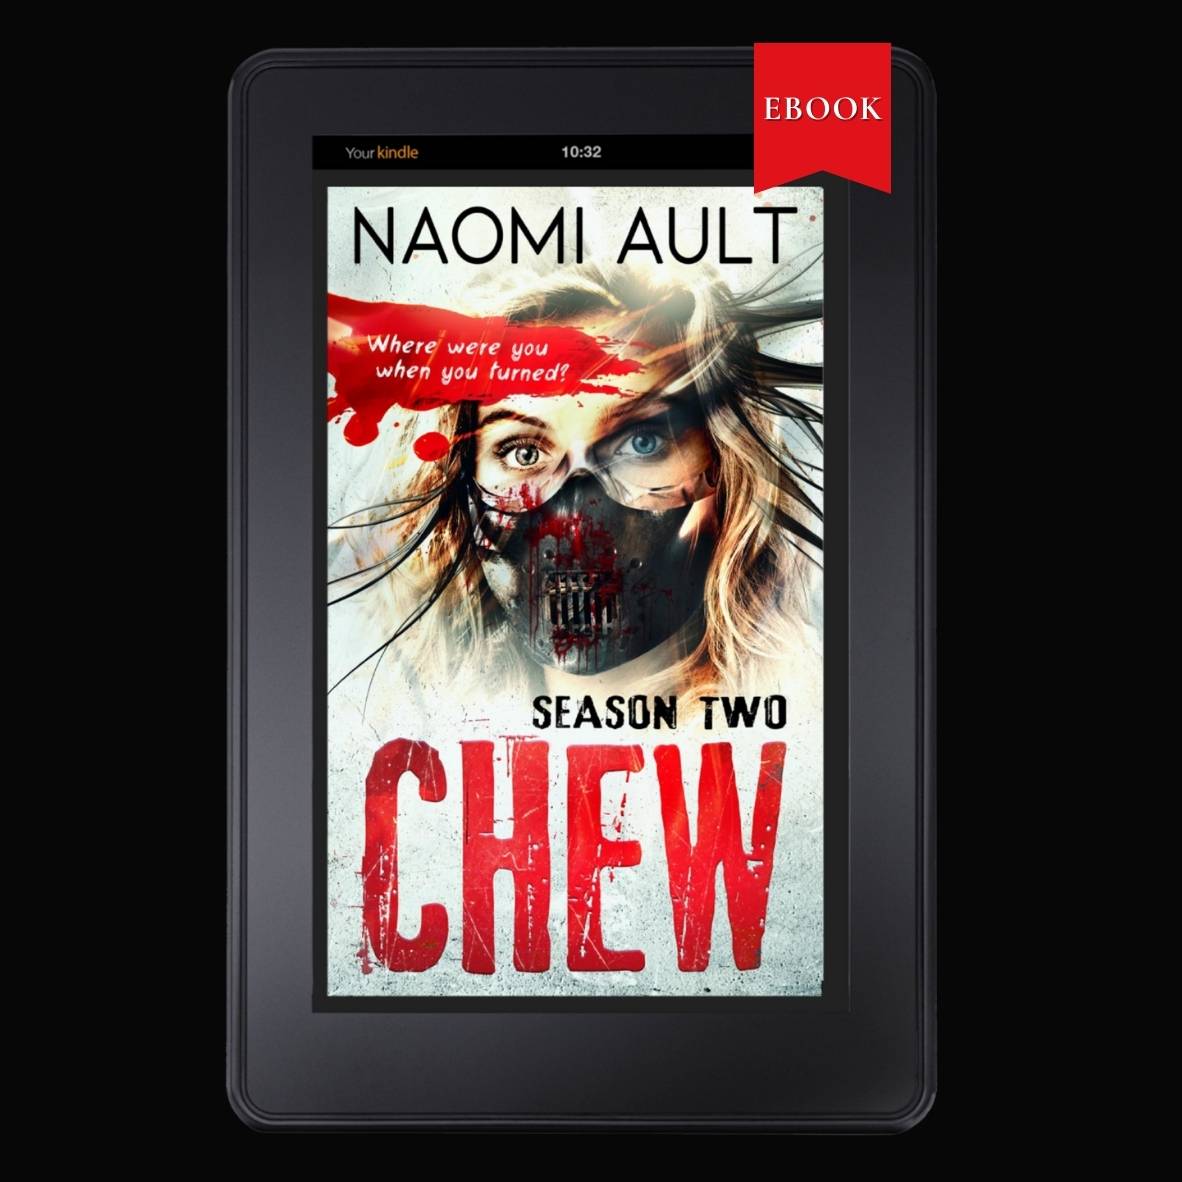 Chew: Season Two (EBOOK) Front Cover - IndieFusion Books & More - Digital -Zombie Apocalypse & Post-Apocalypse Horror Fiction